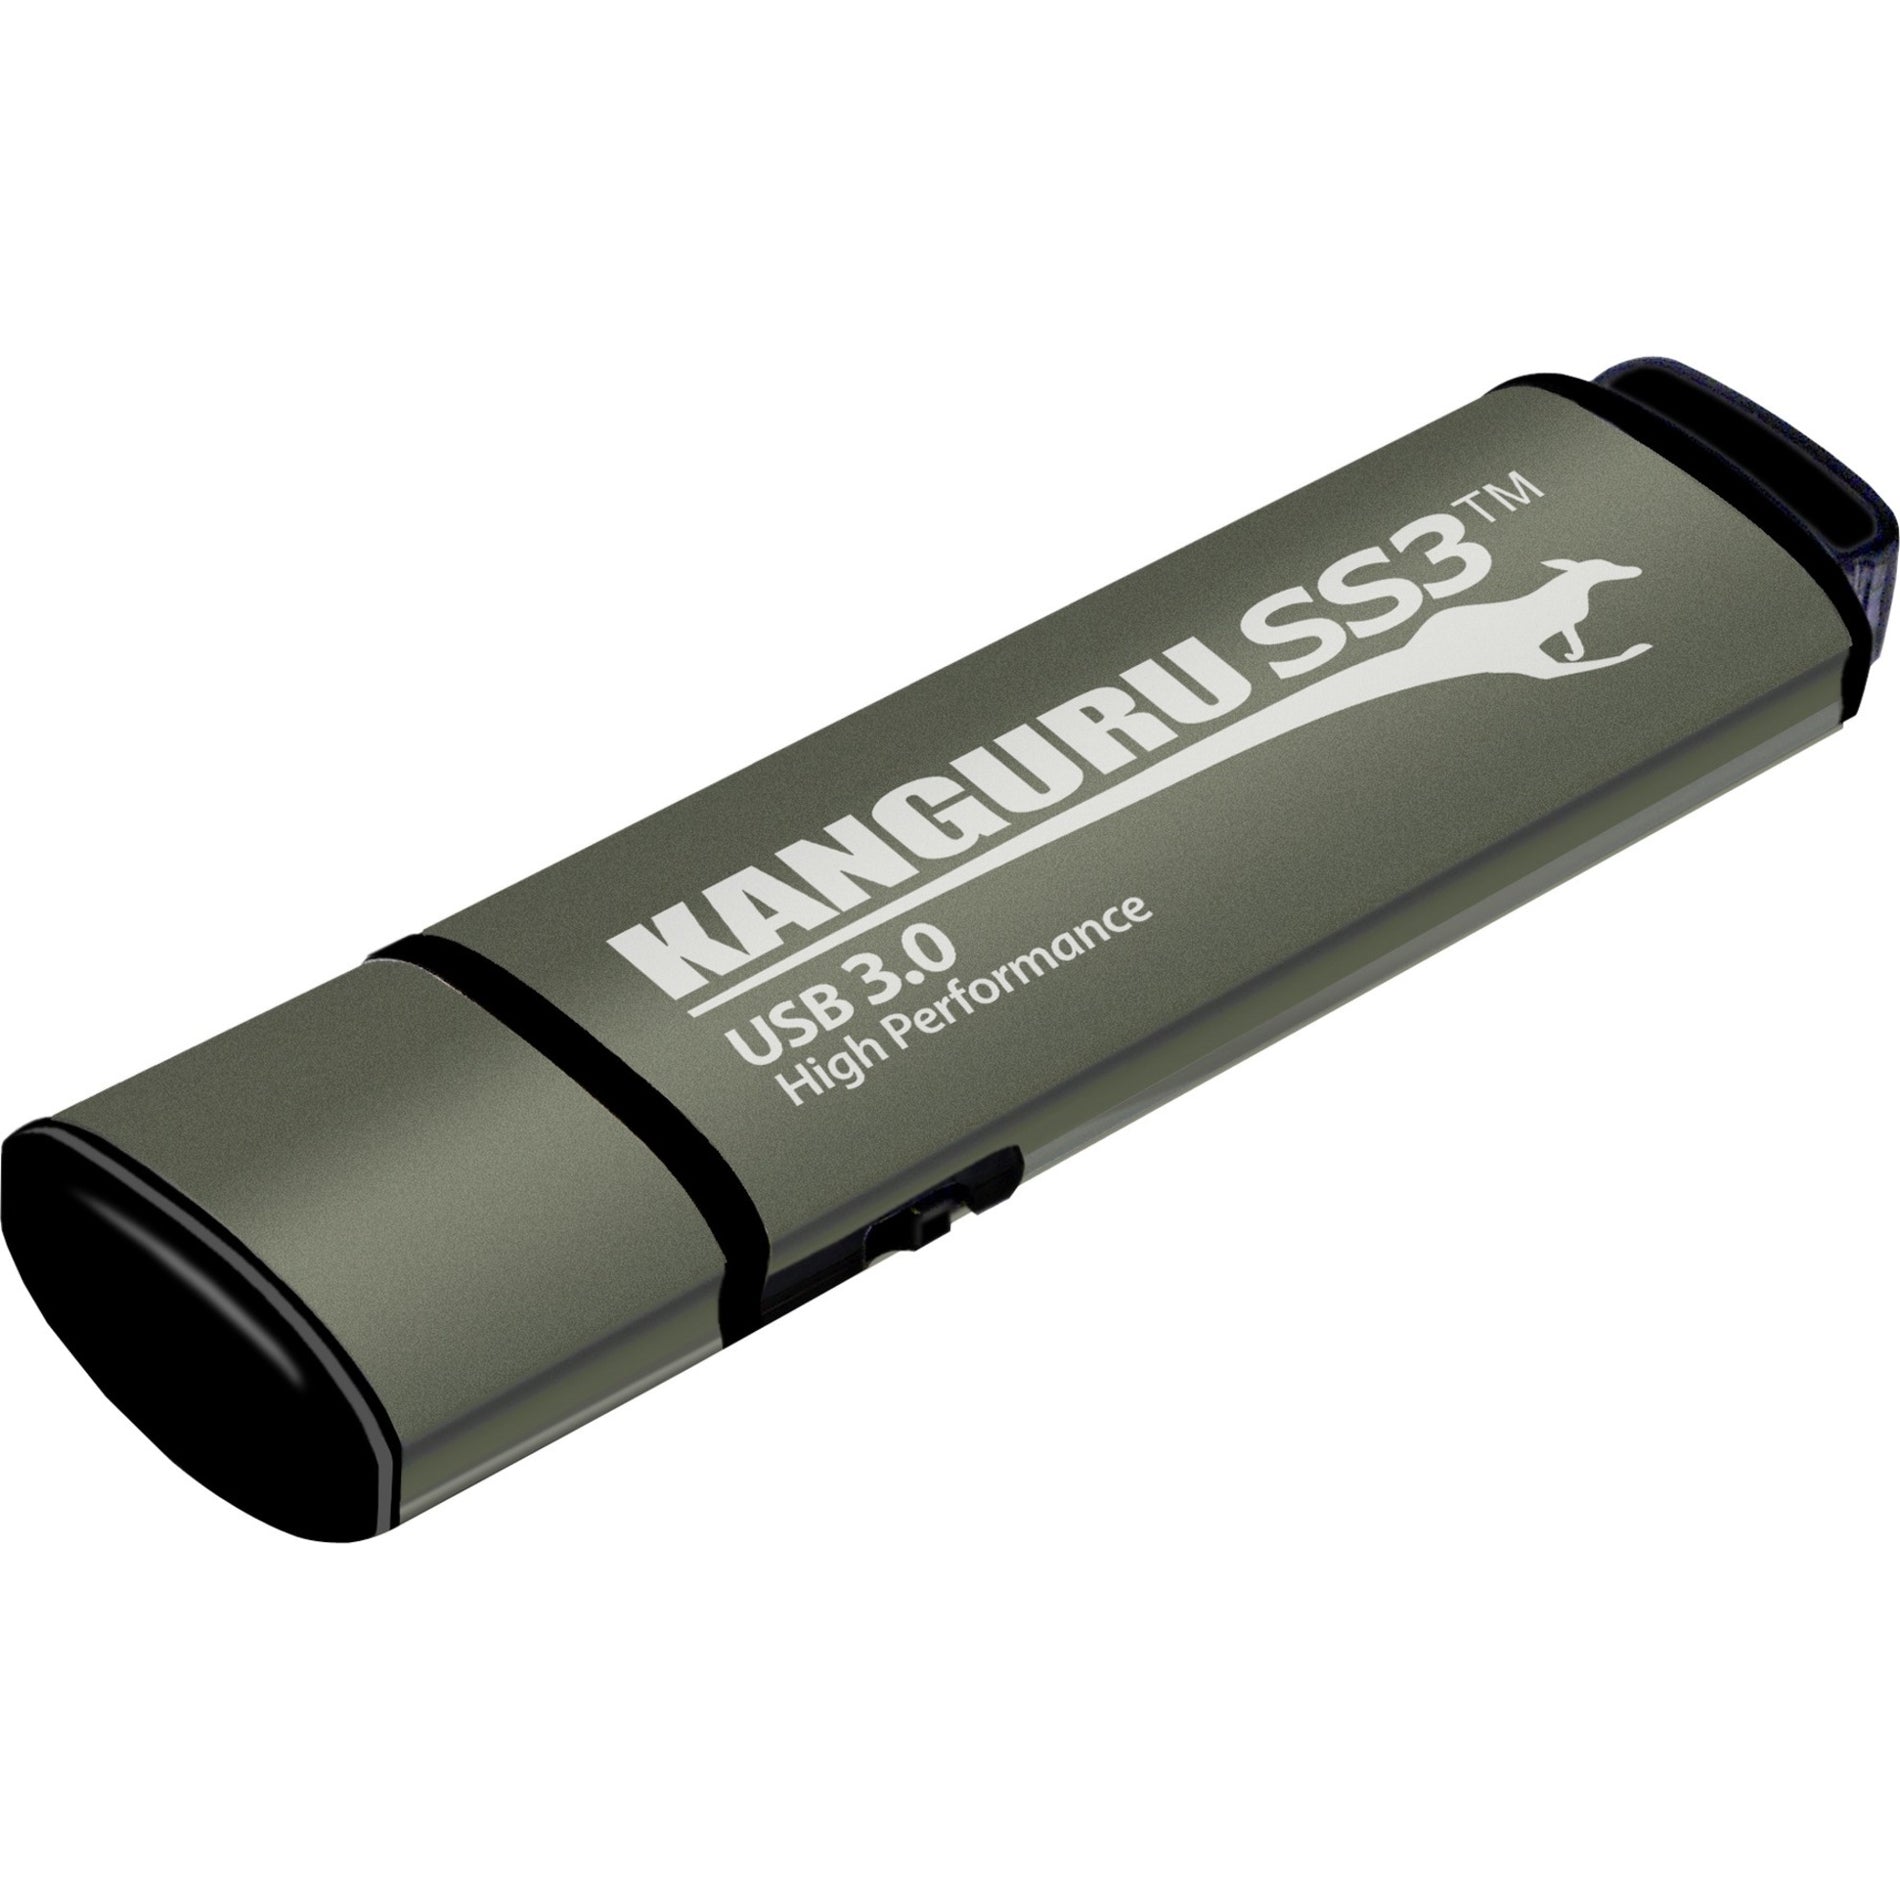 Kanguru KF3WP-16G SS3 USB 3.0 Flash Drive with Write Protect Switch, 16GB Storage Capacity